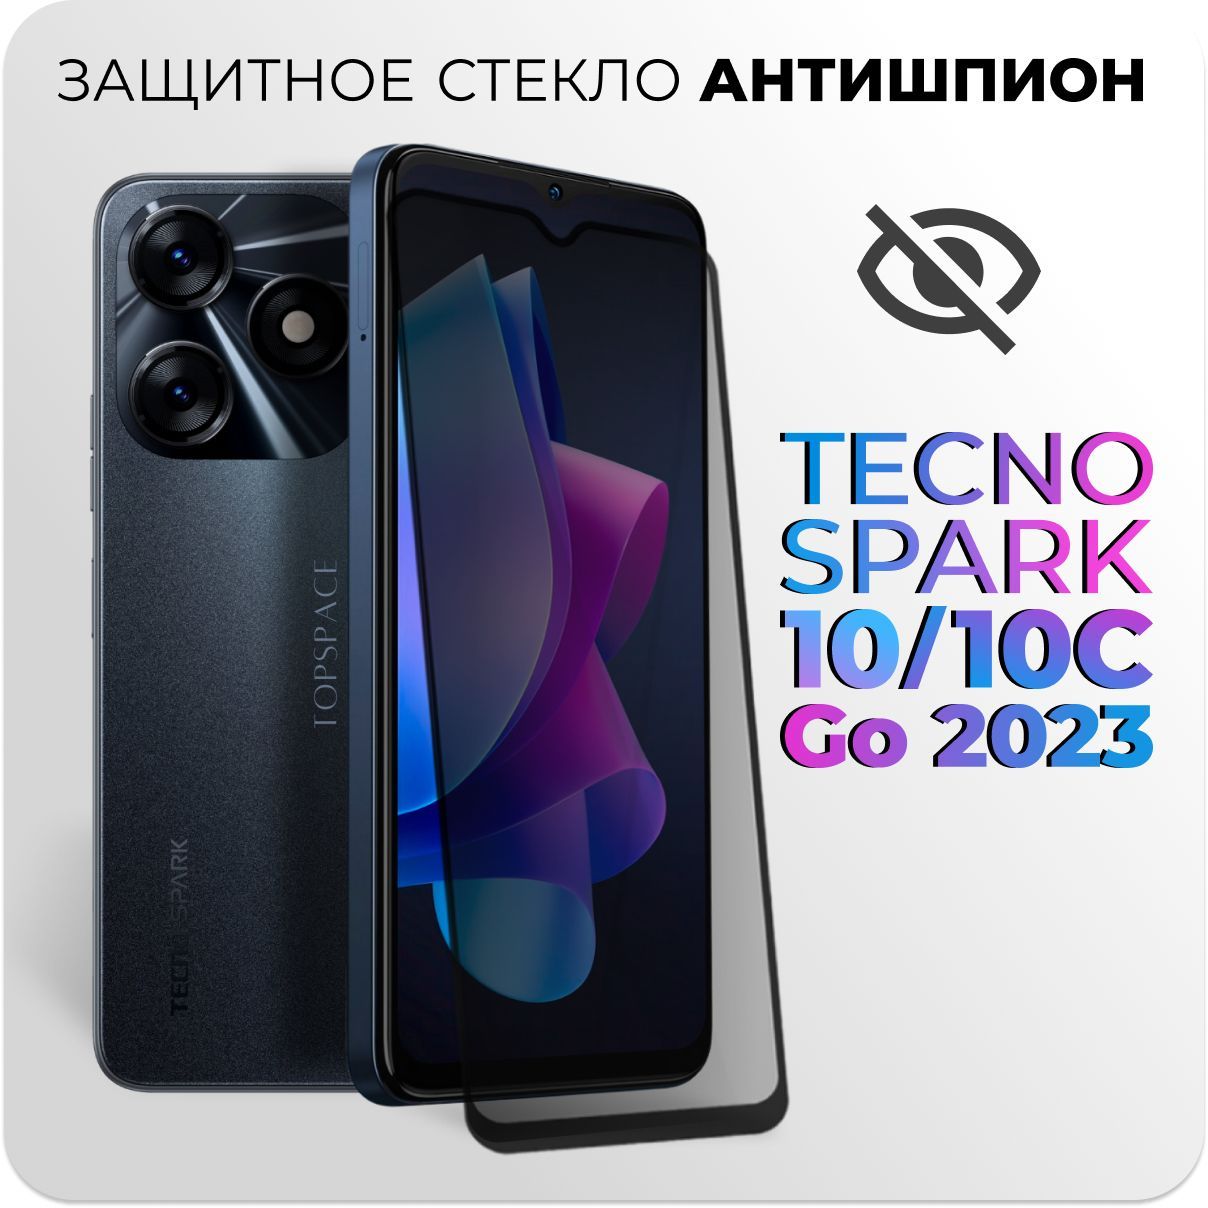 Tecno spark go 2024 купить. Techno Spark go 2023. Techno Spark 10c. Techno Spark go 2024. Techno Spark go 2024 256 GB.